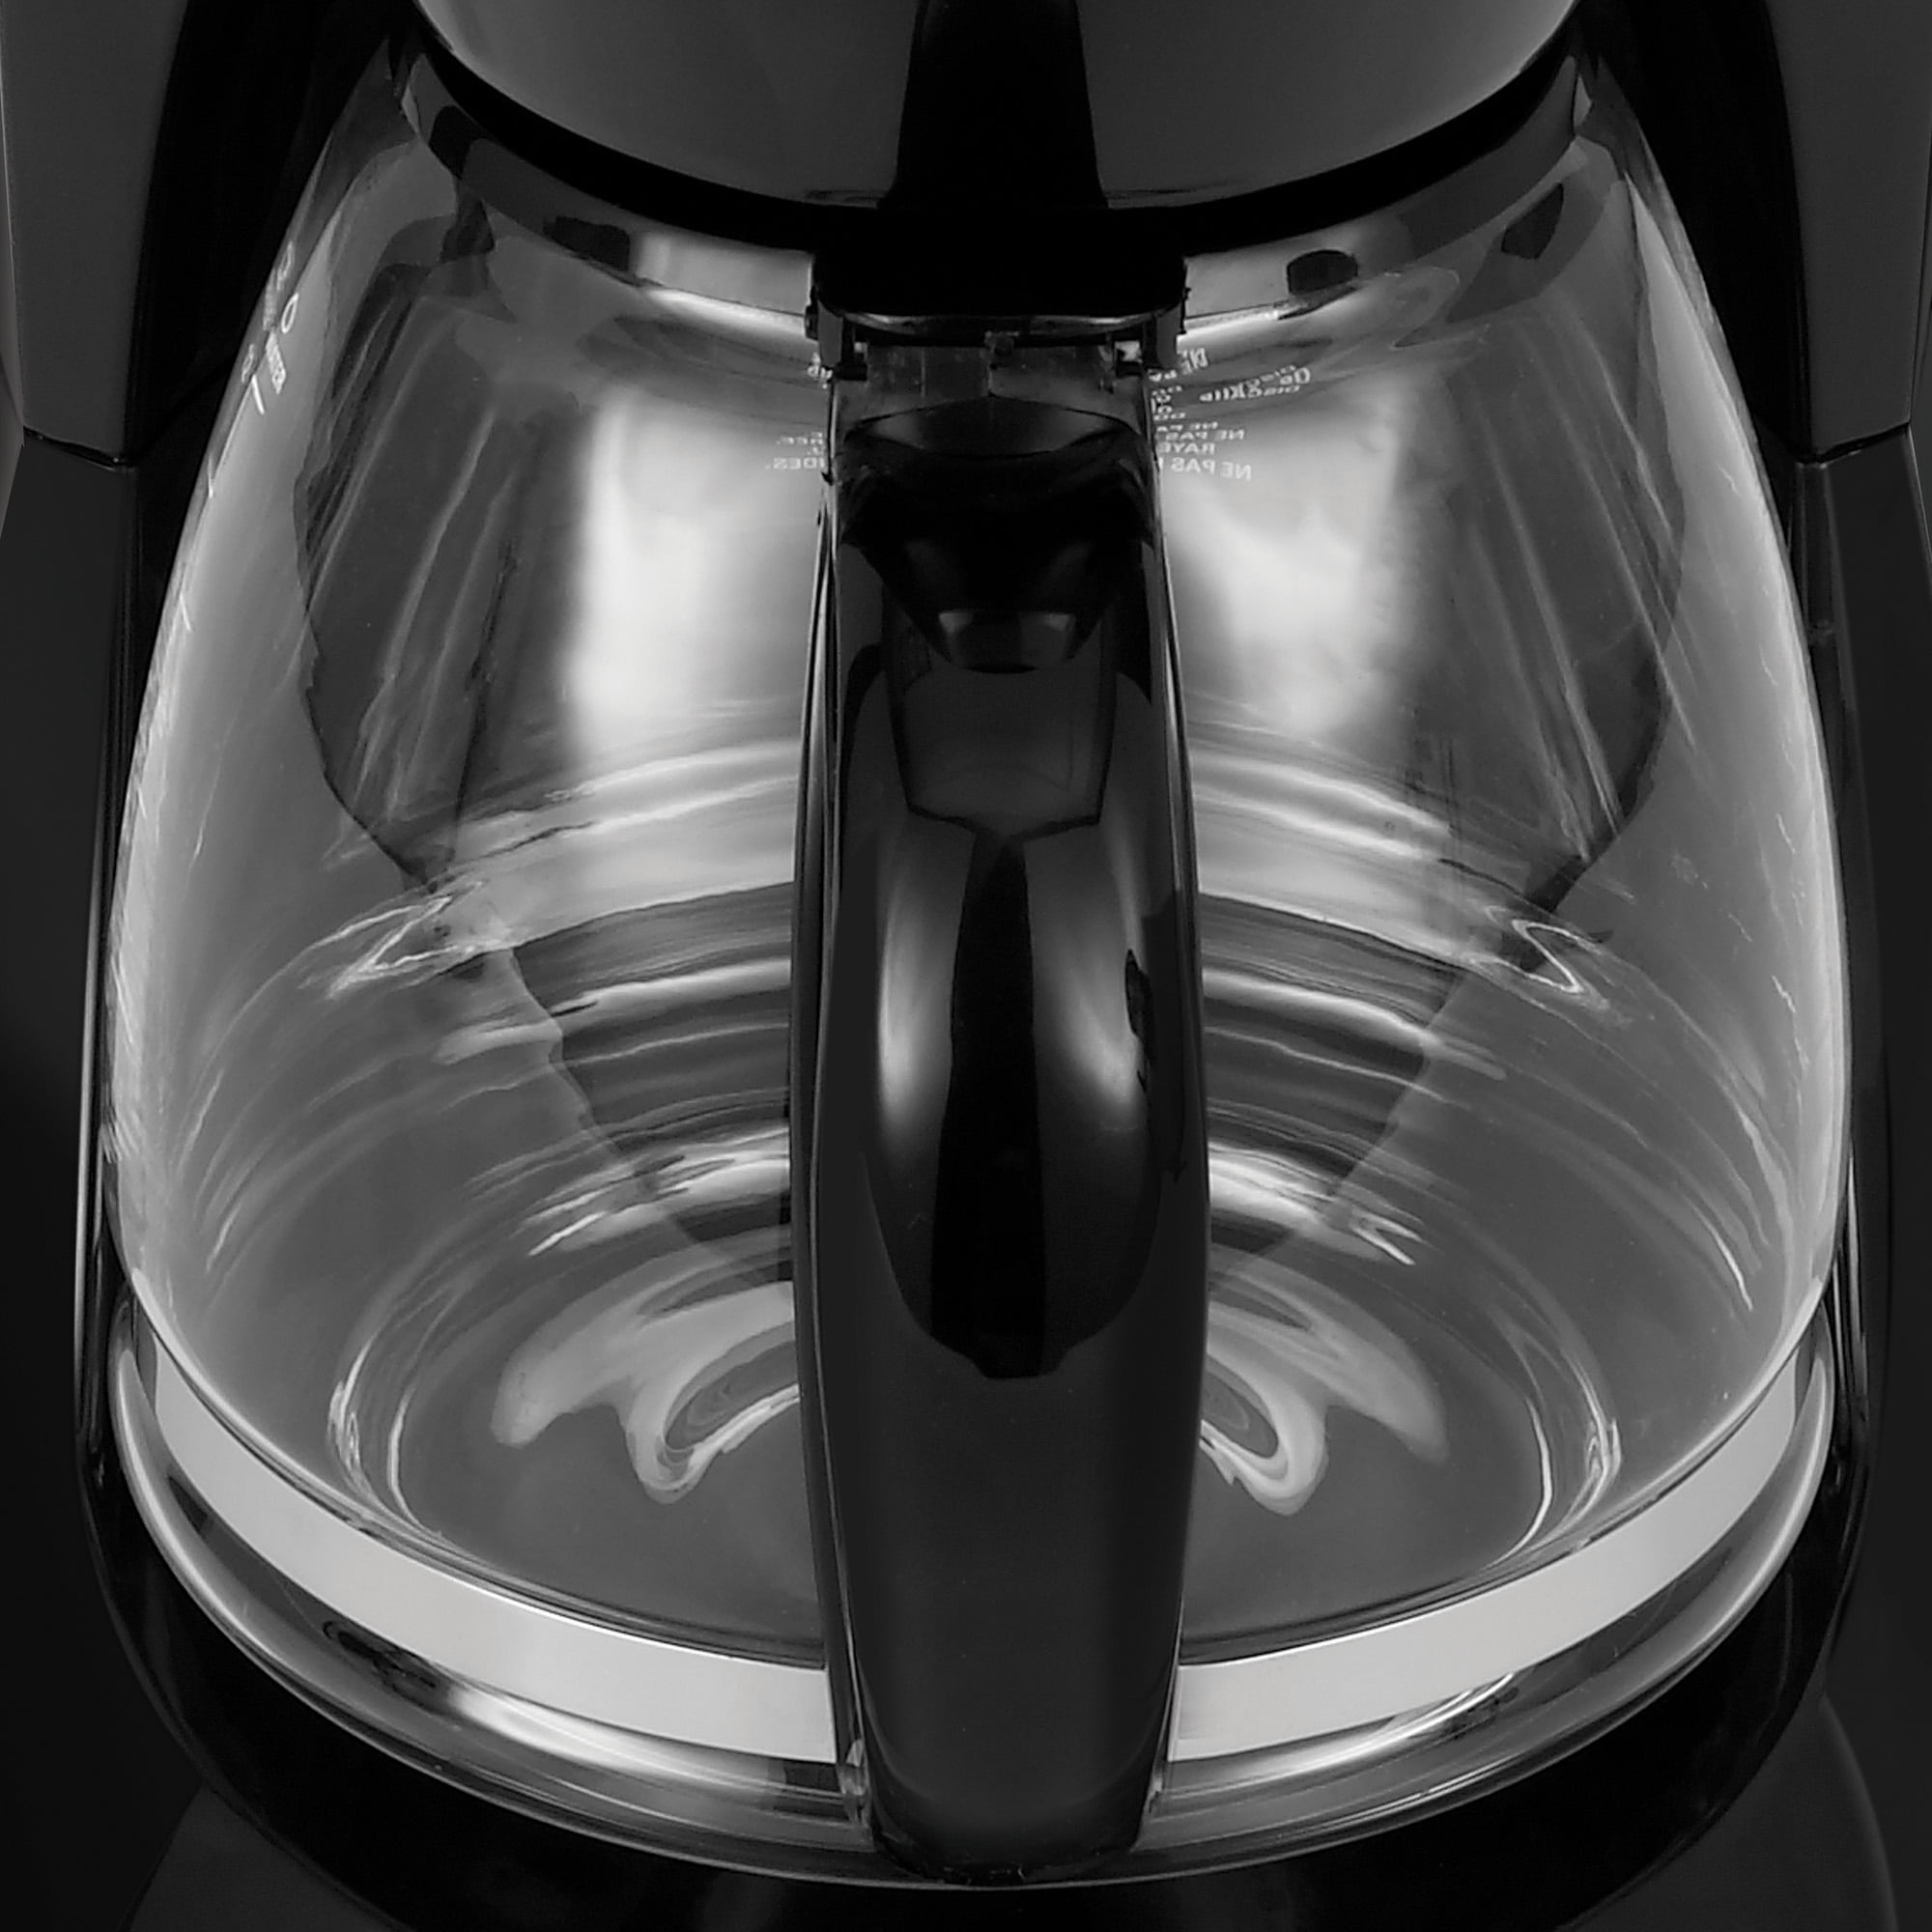 Black & Decker DCM2160B 12-Cup Programmable Coffee Maker - Bed Bath &  Beyond - 15011290